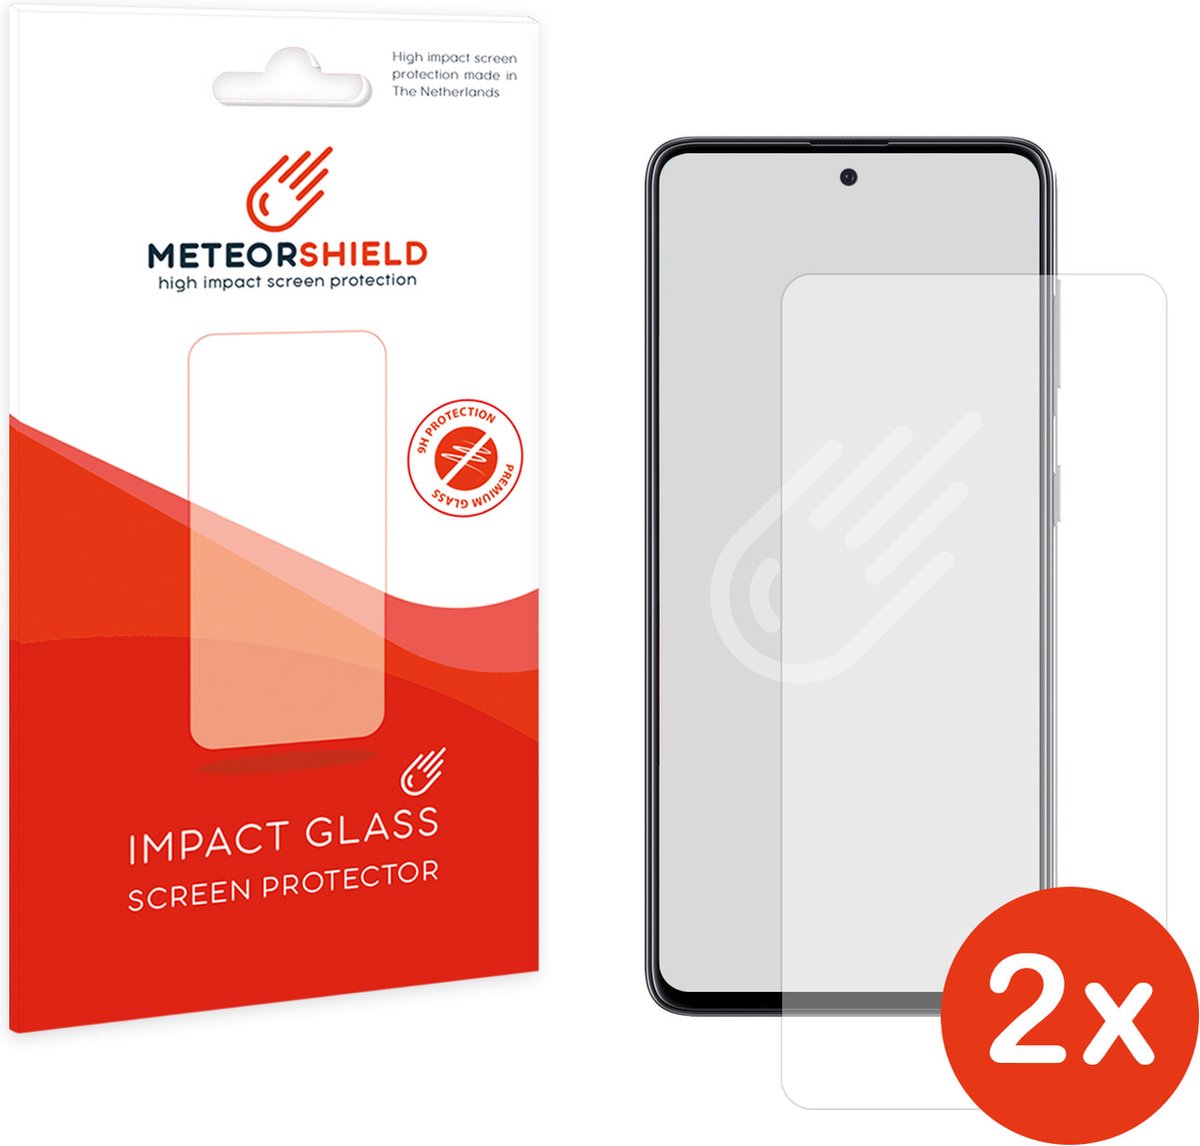 2 stuks: Meteorshield Samsung Galaxy A71 screenprotector - Ultra clear impact glass